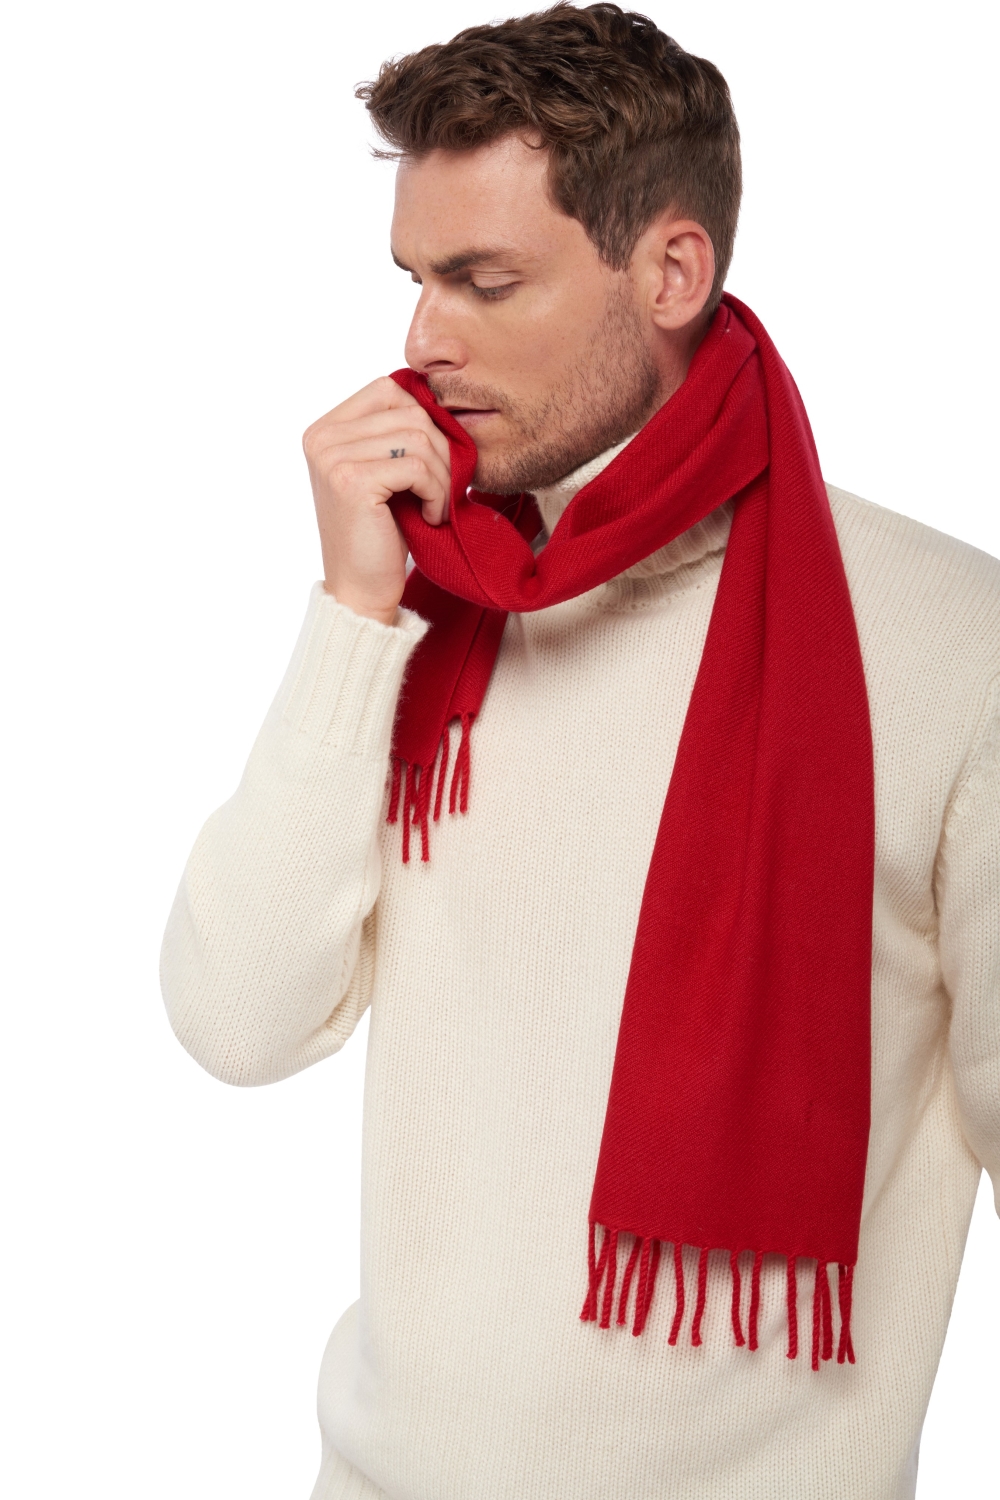 Cachemire pull homme echarpes et cheches zak170 rouge profond 170 x 25 cm